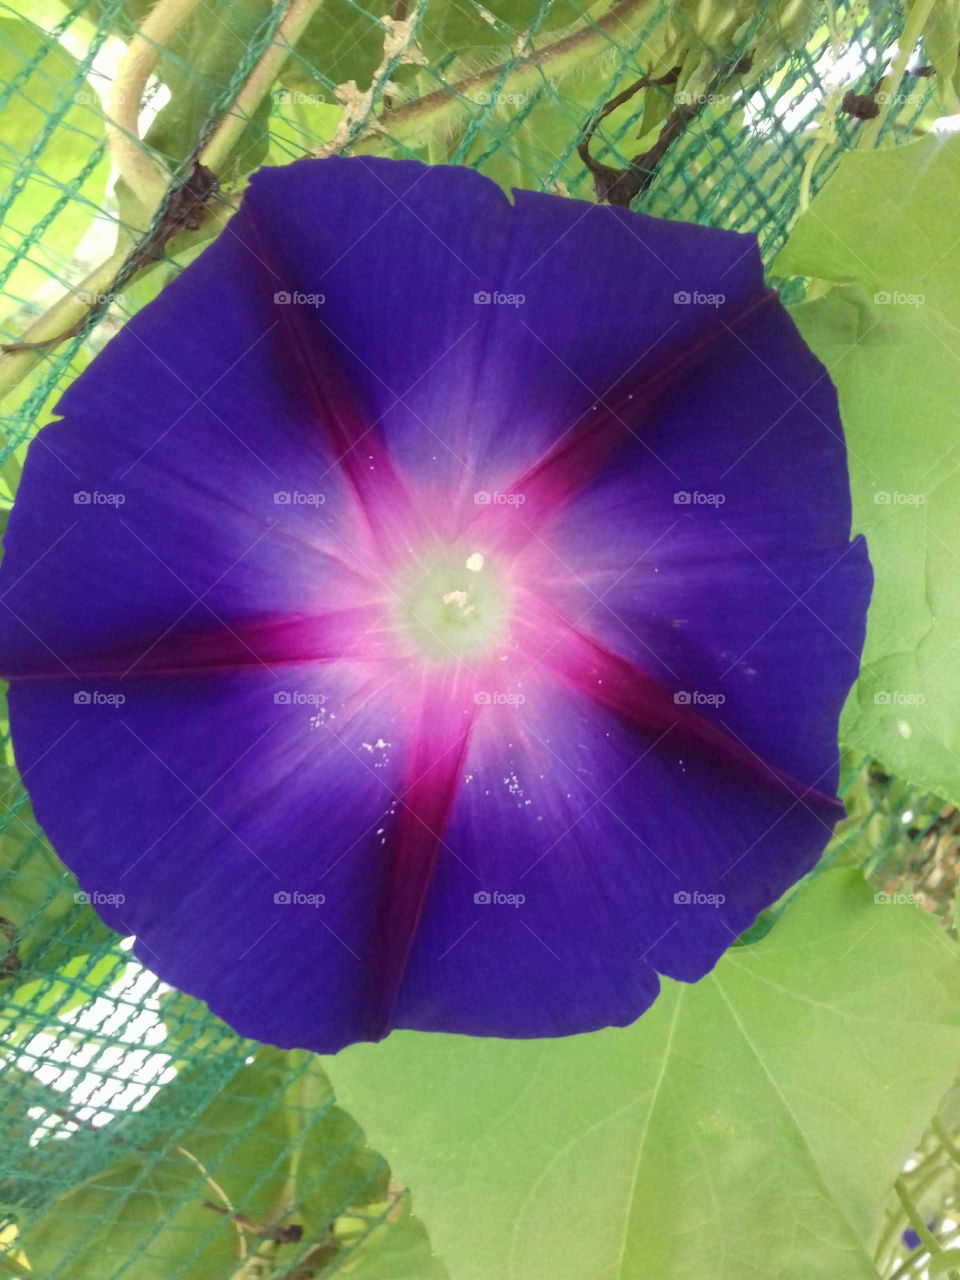 violet ipomea morning glory flower